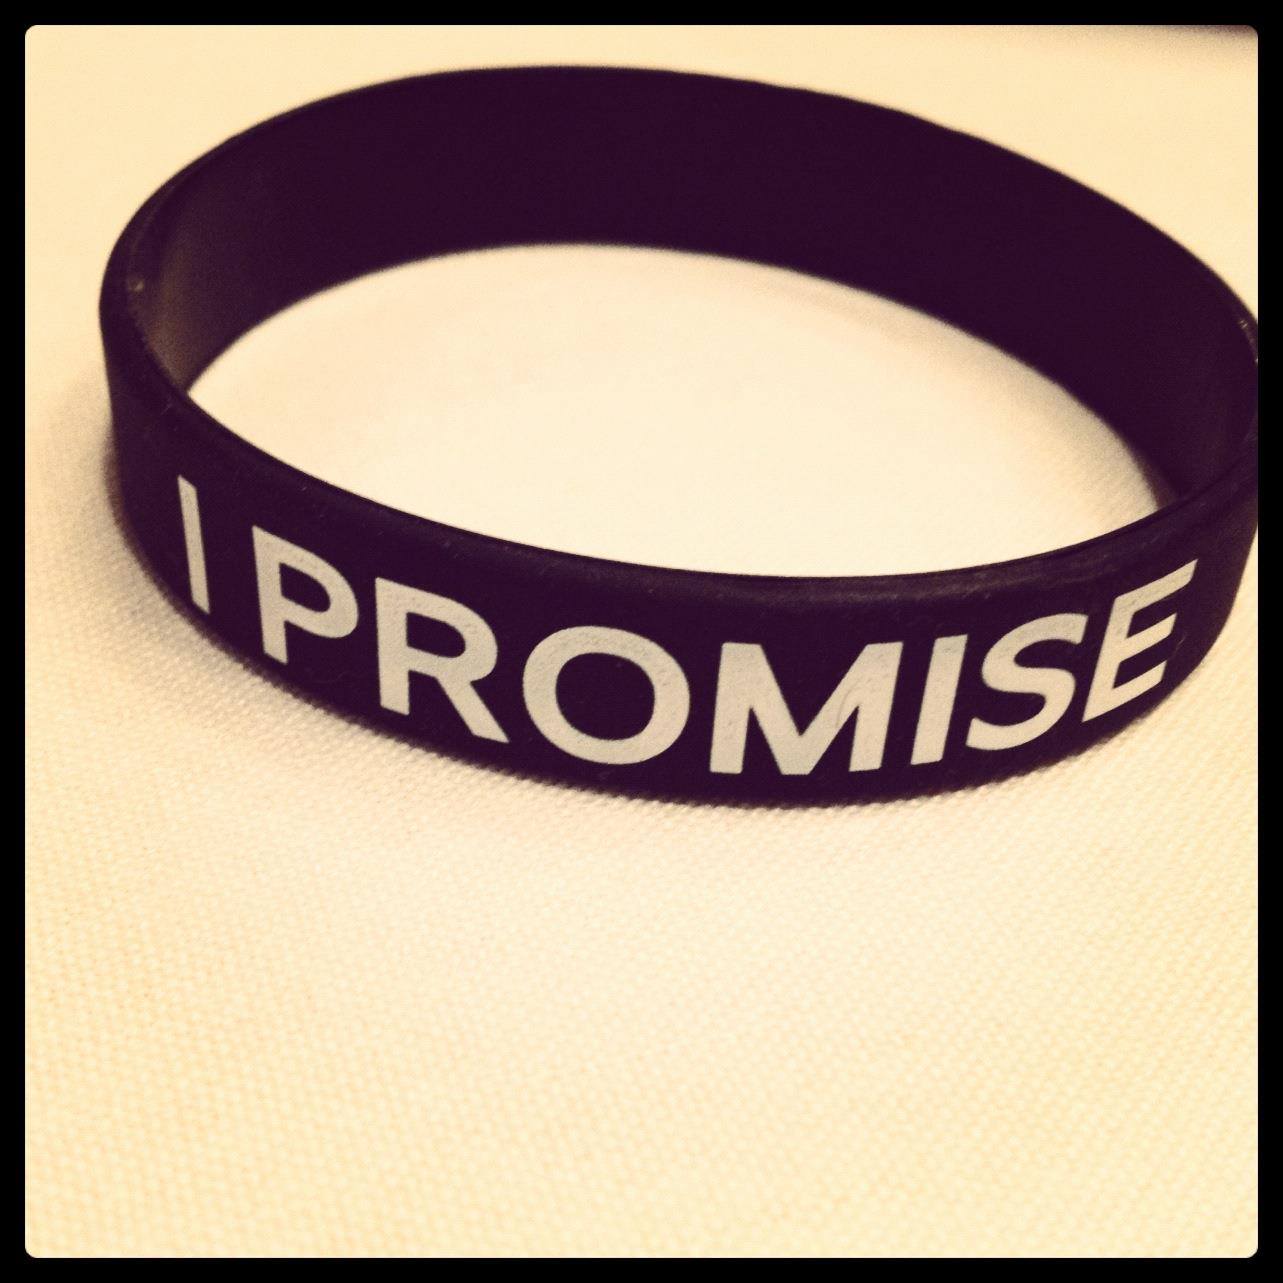 “I promise”